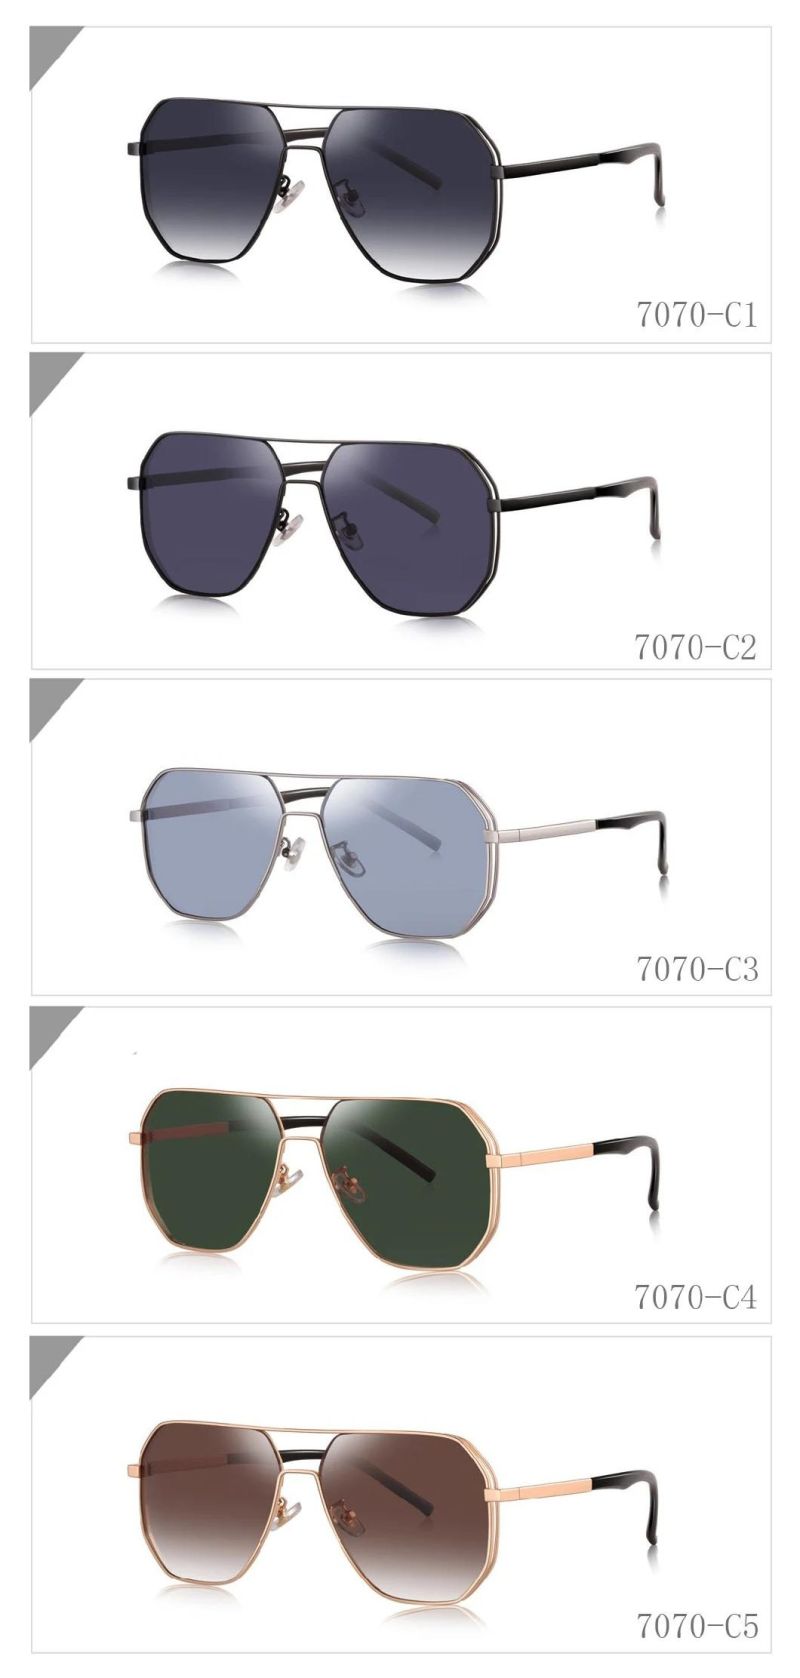 Latest Fashion Style Sunglass New High Quality Men Metal Stylish Sunglasses in Stock